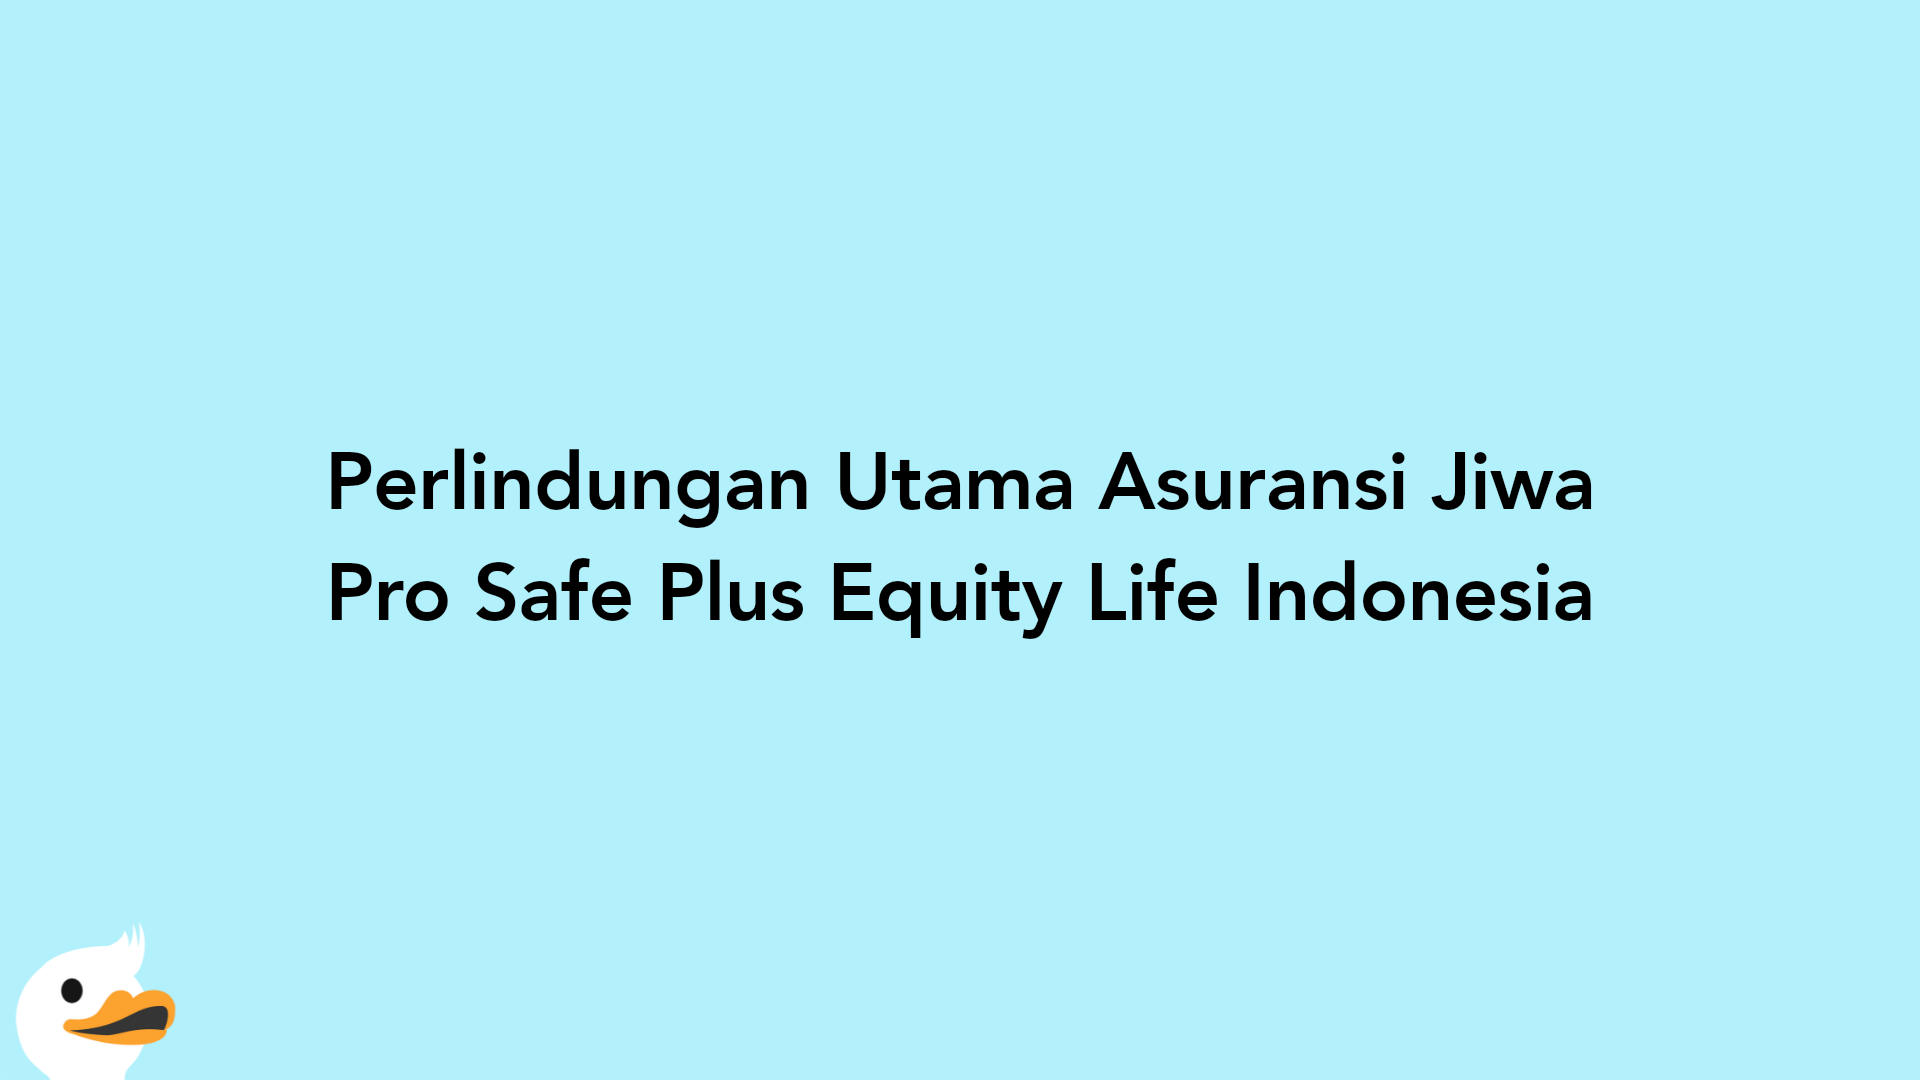 Perlindungan Utama Asuransi Jiwa Pro Safe Plus Equity Life Indonesia